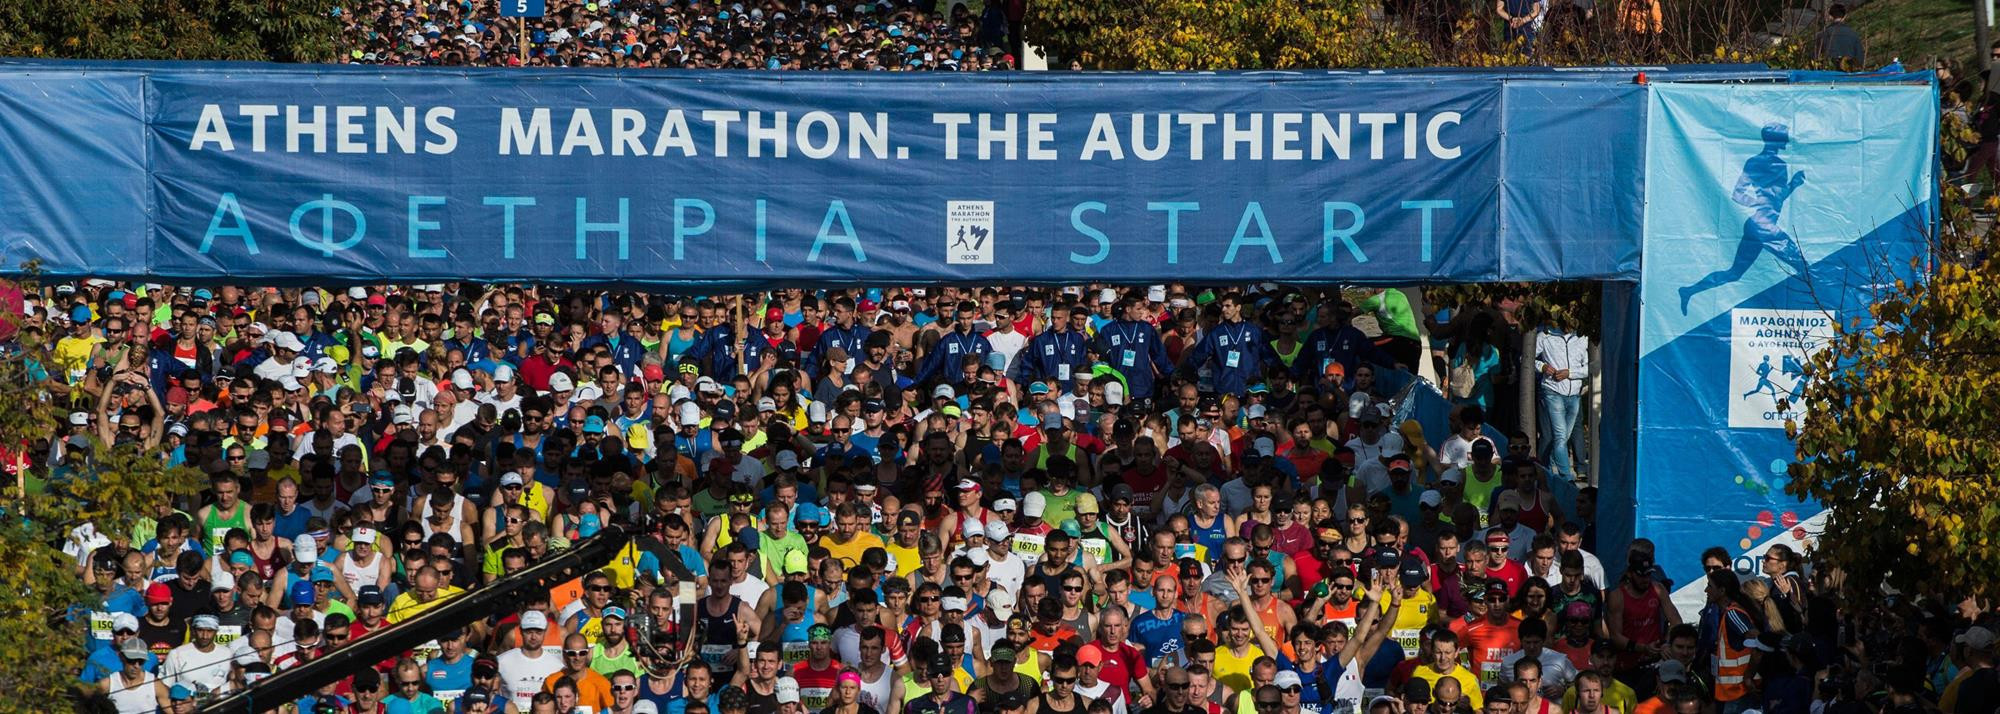 World Athletics Heritage Plaque for Athens Marathon unveiled